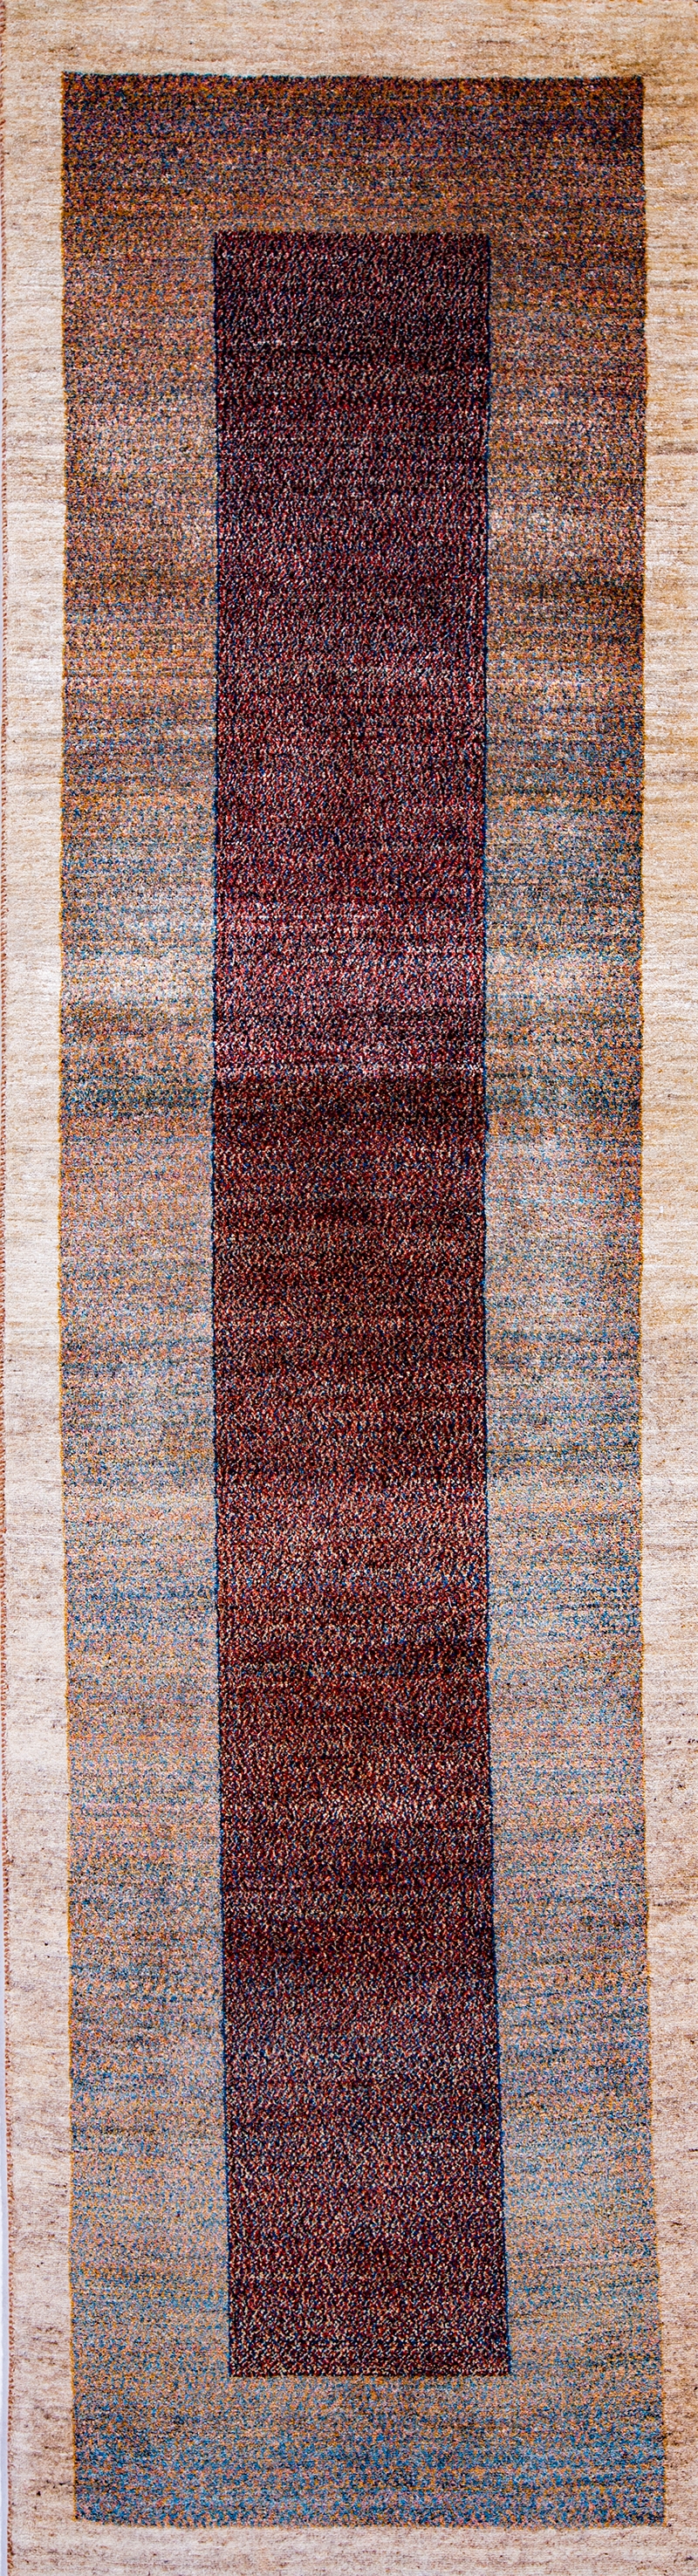 Speckled Chimera Runner Gabbehs Abstract Plain Kashkuli 75 x 278cm Kopie